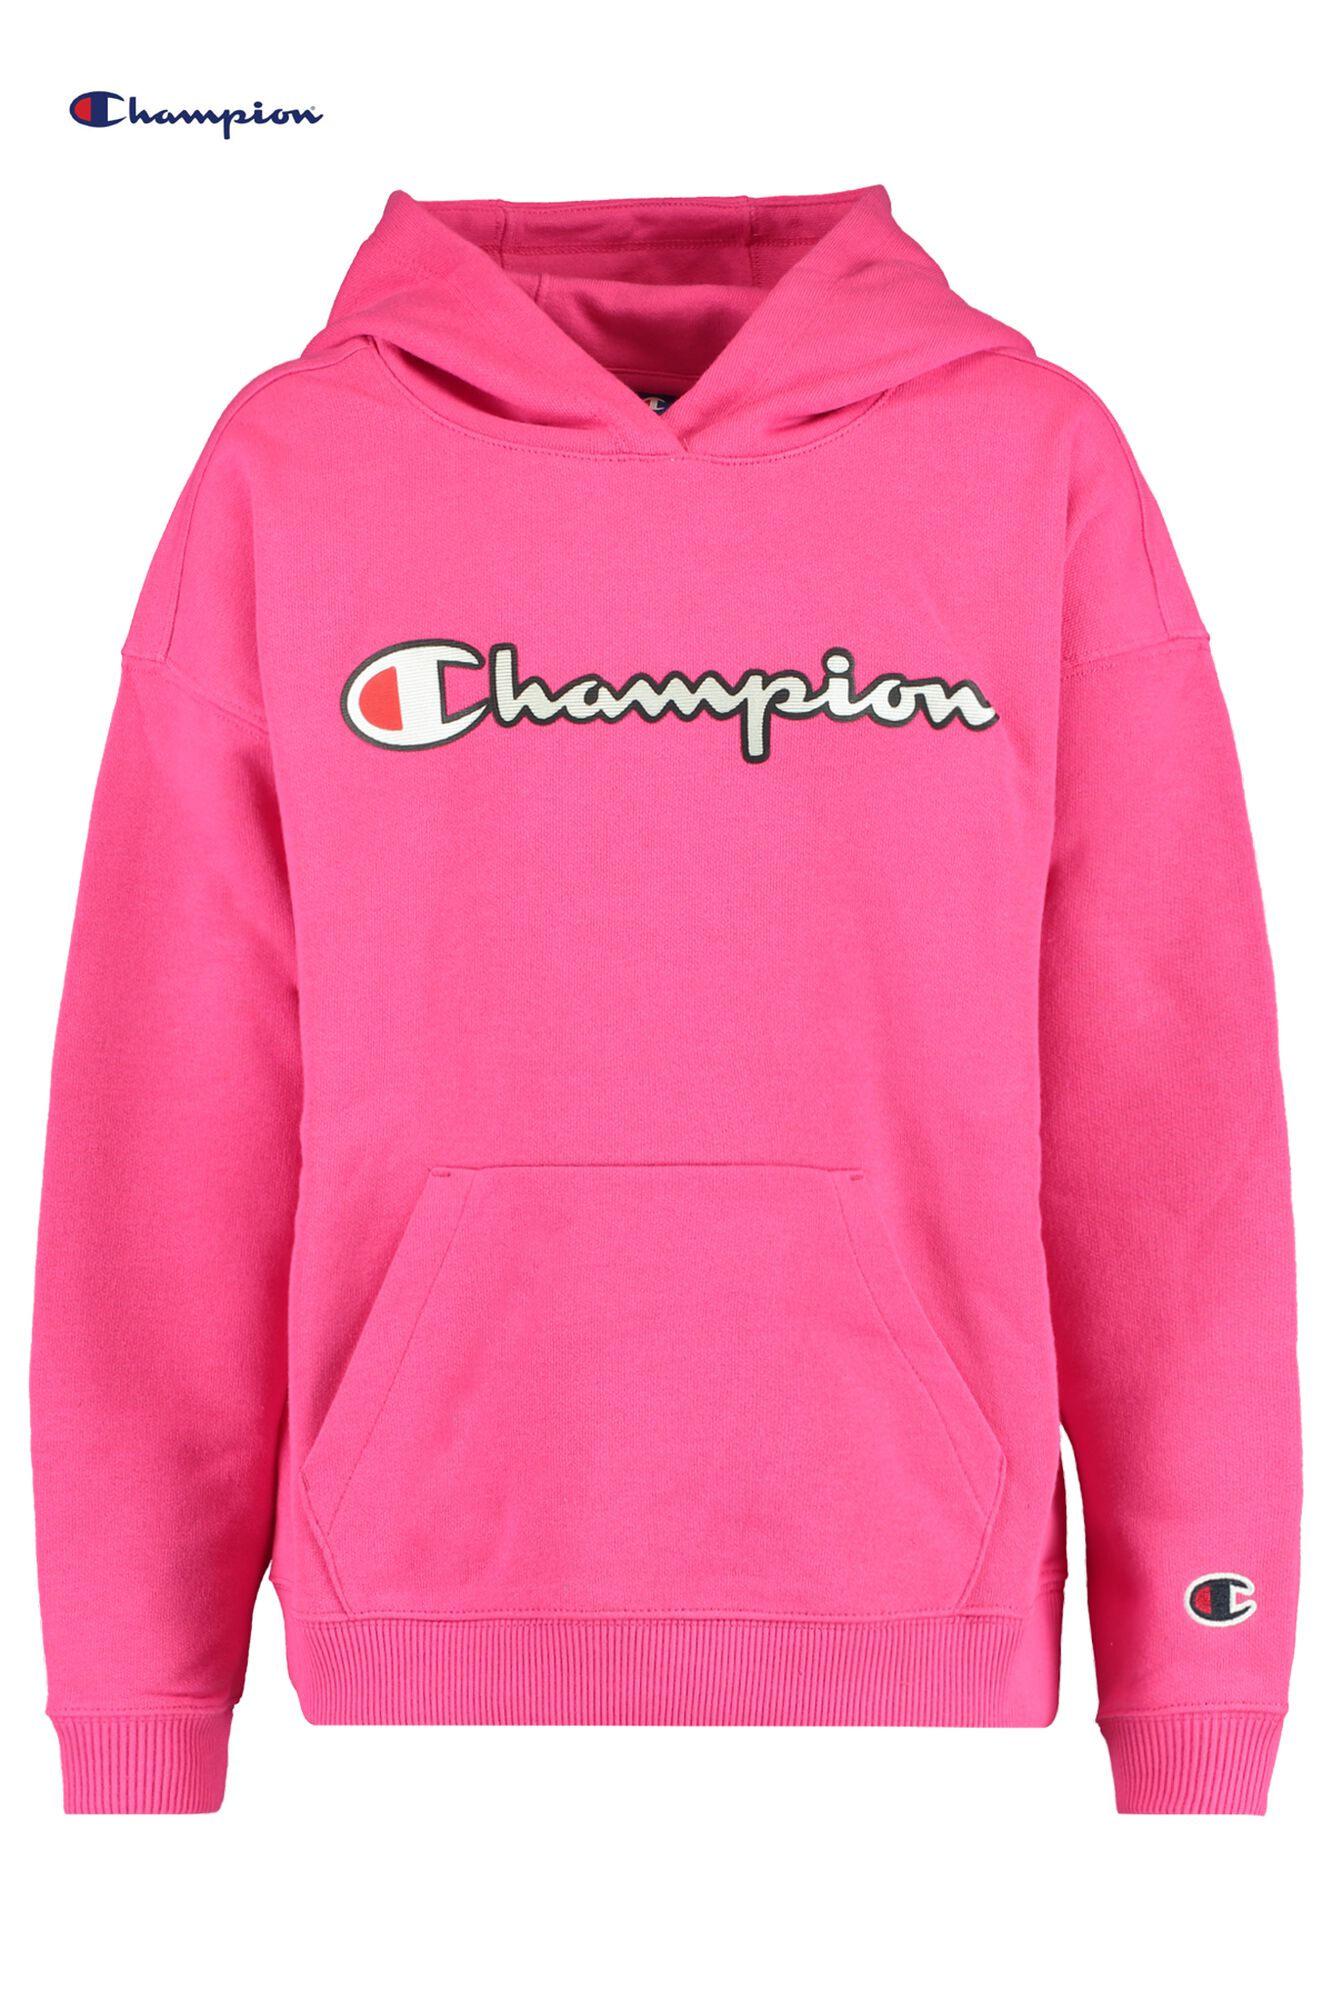 Girls Hoodie Champion Pink Buy Online America Today